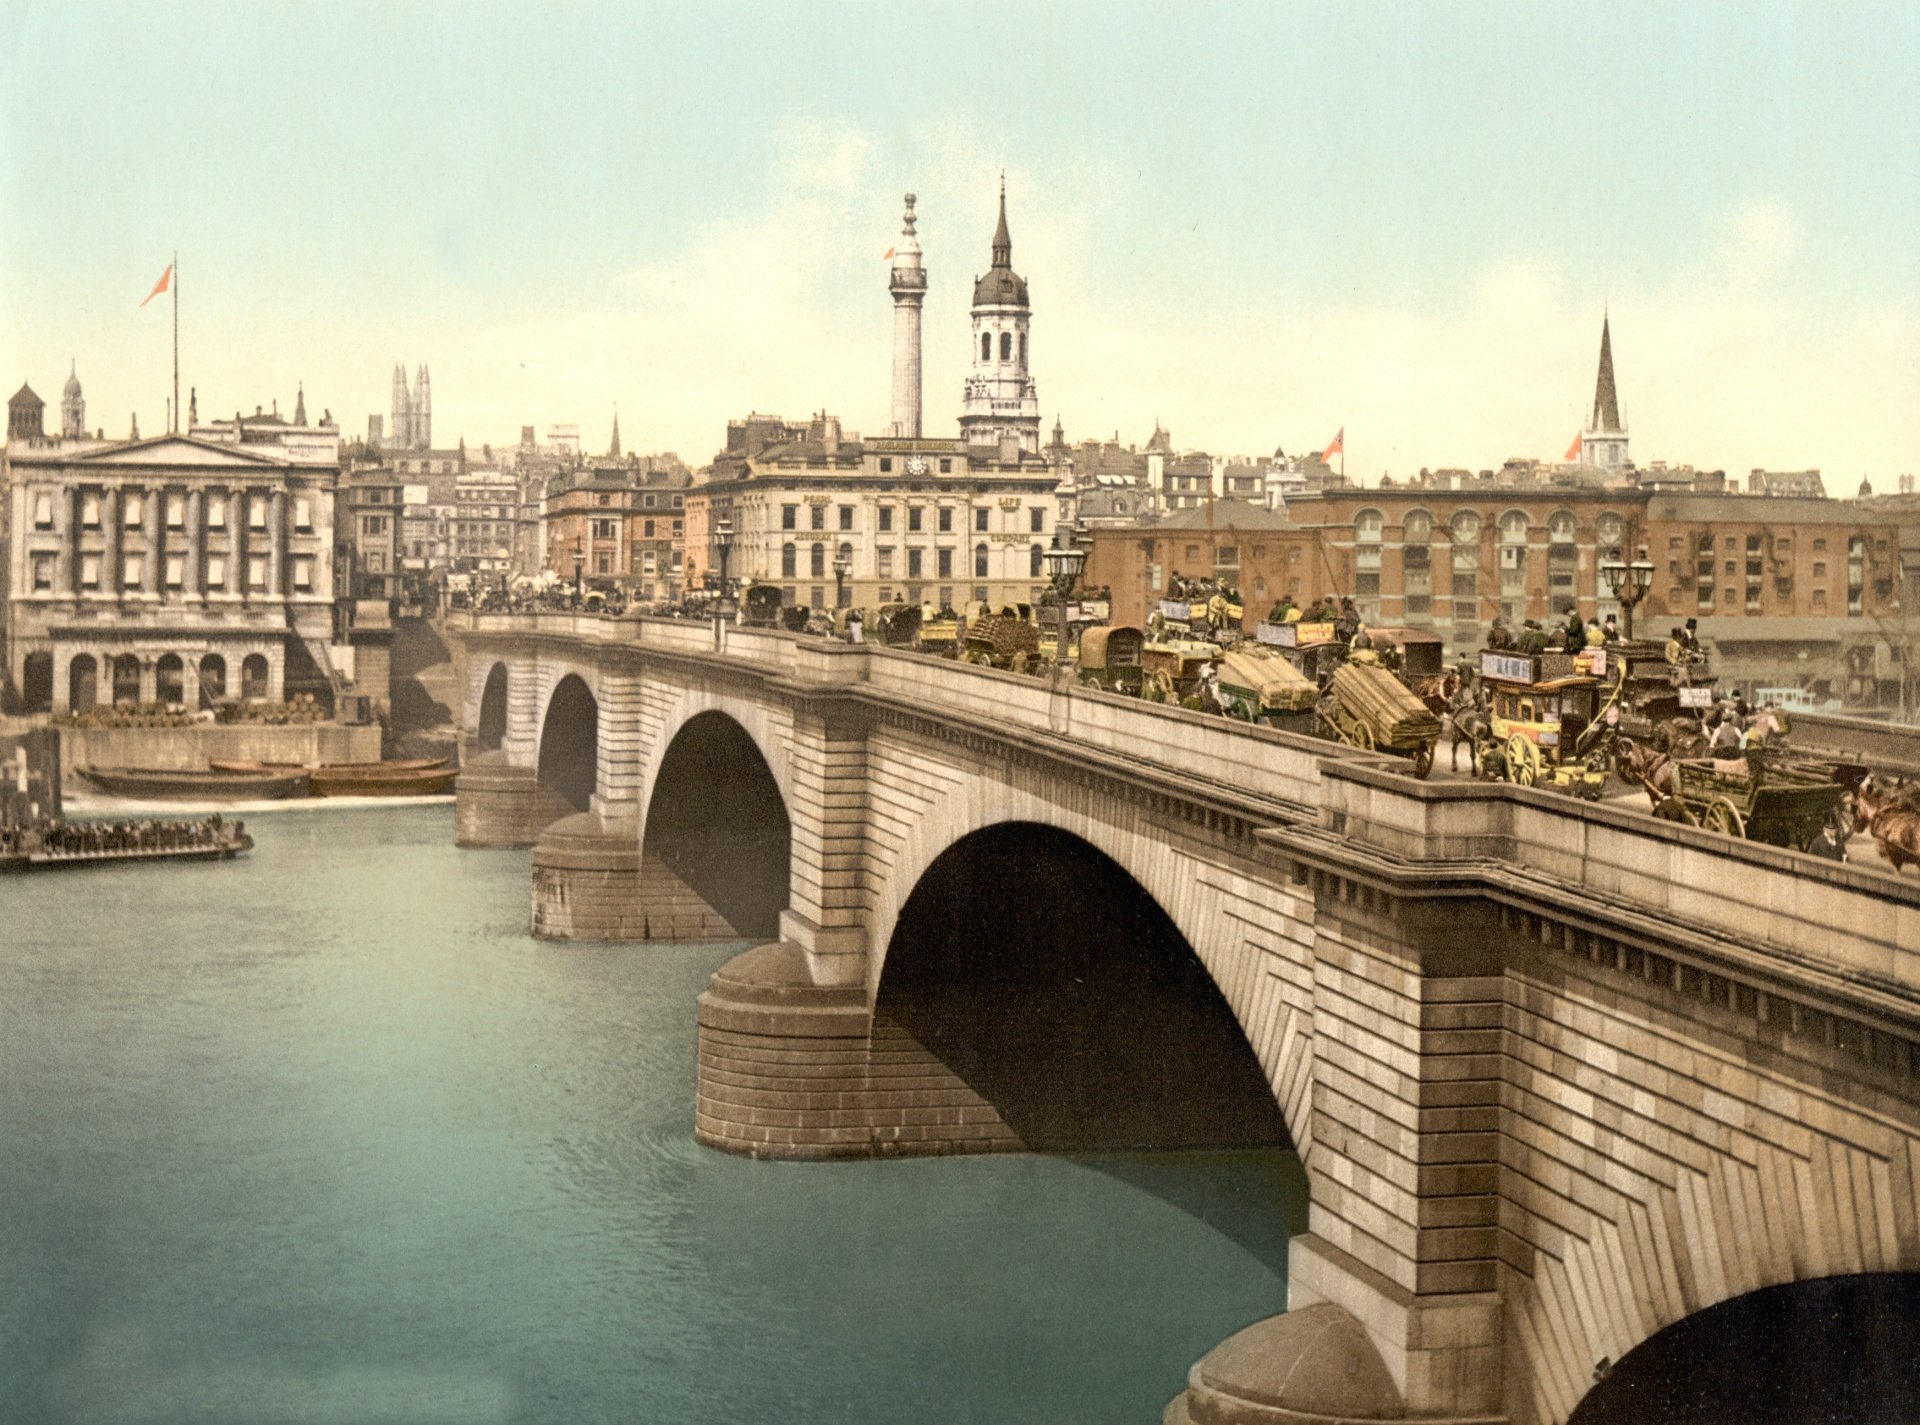 London Bridge in past